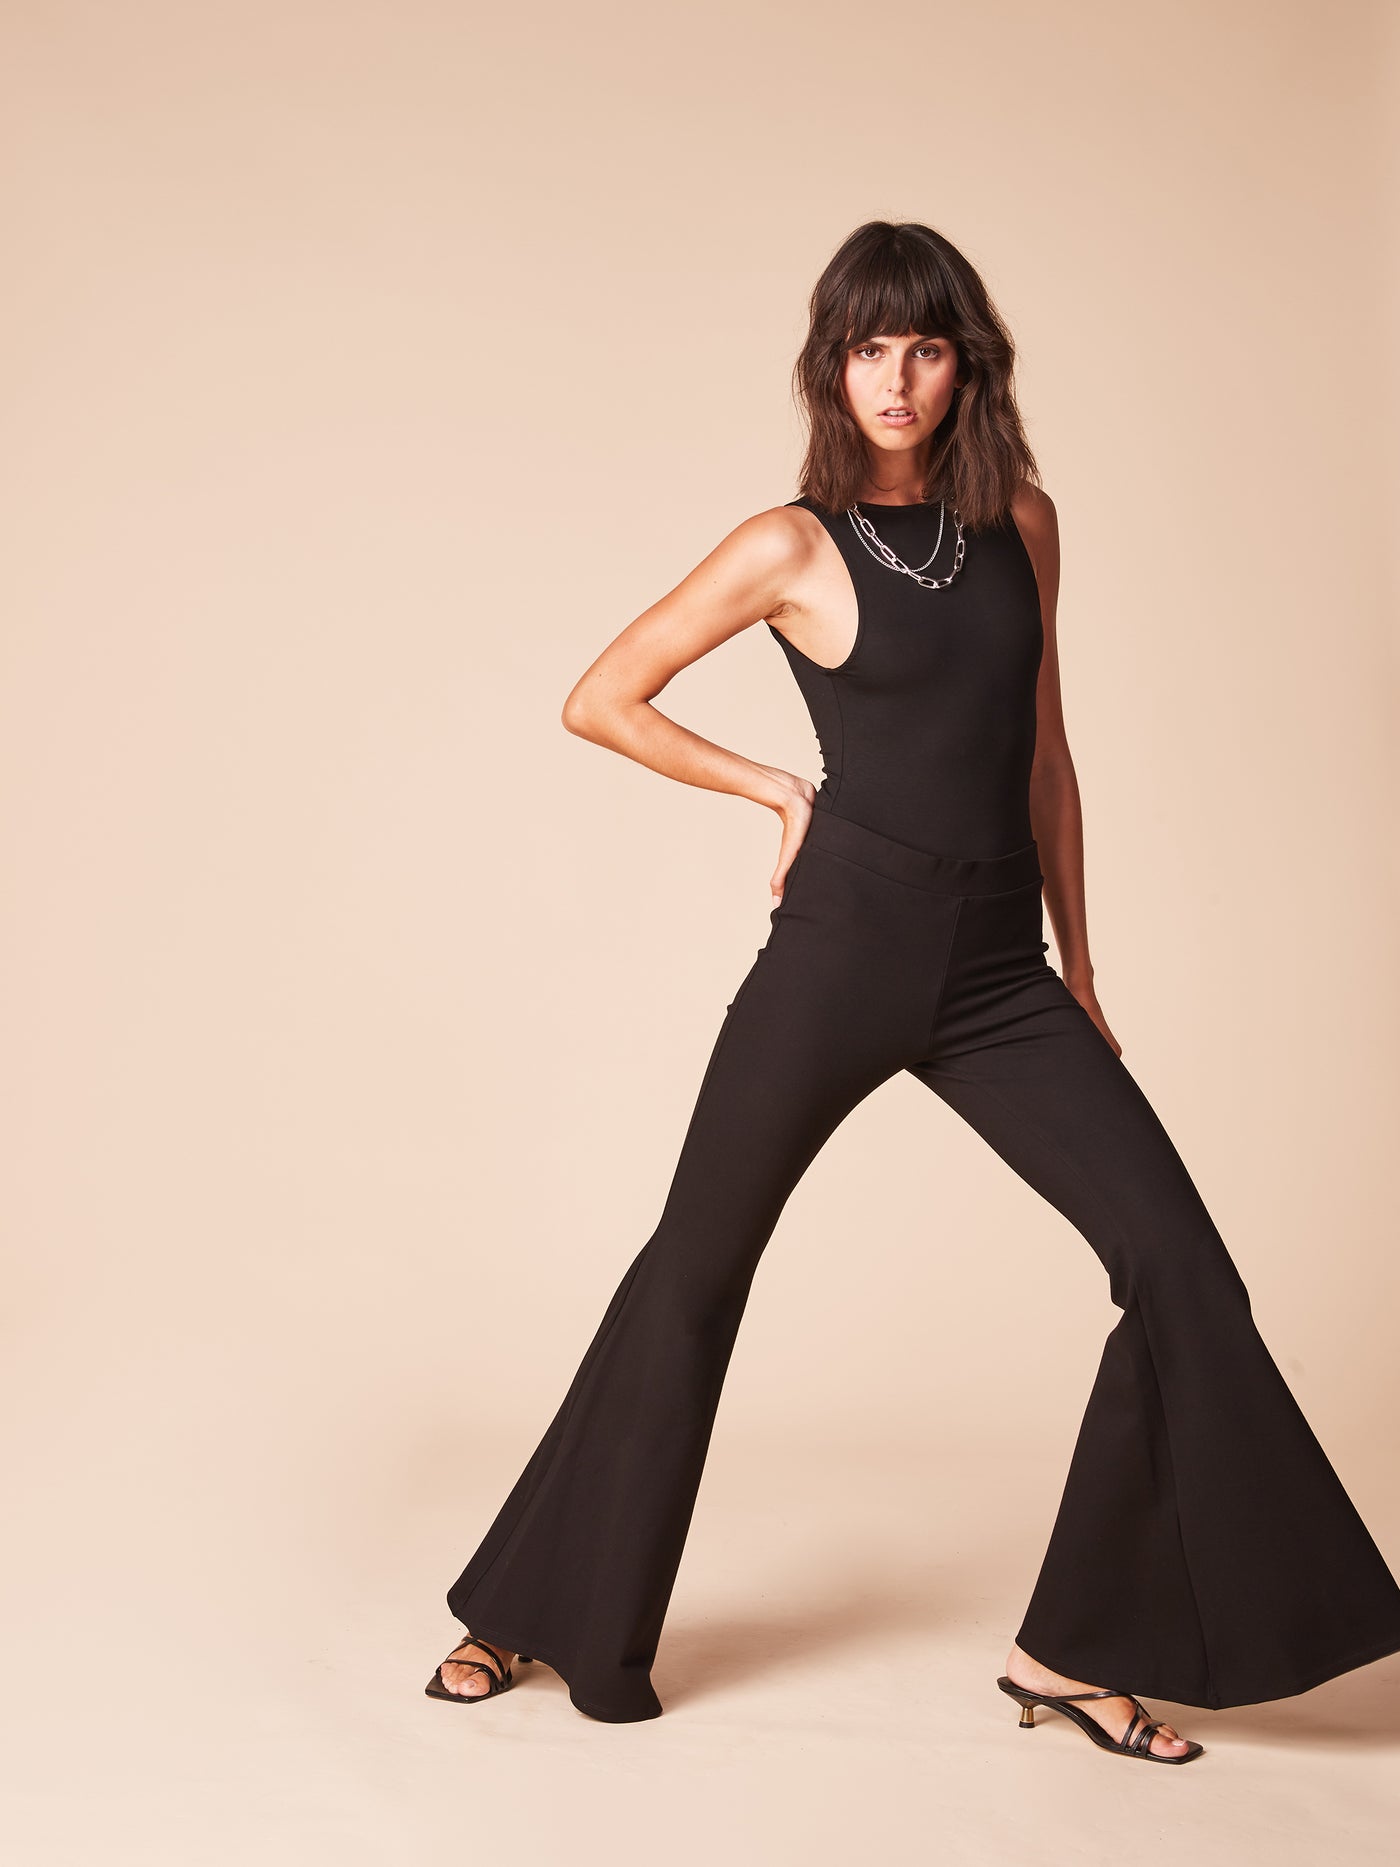 SHE IS REBEL - New bold wardrobe classics for women, shop sustainable fashion, worldwide shipping